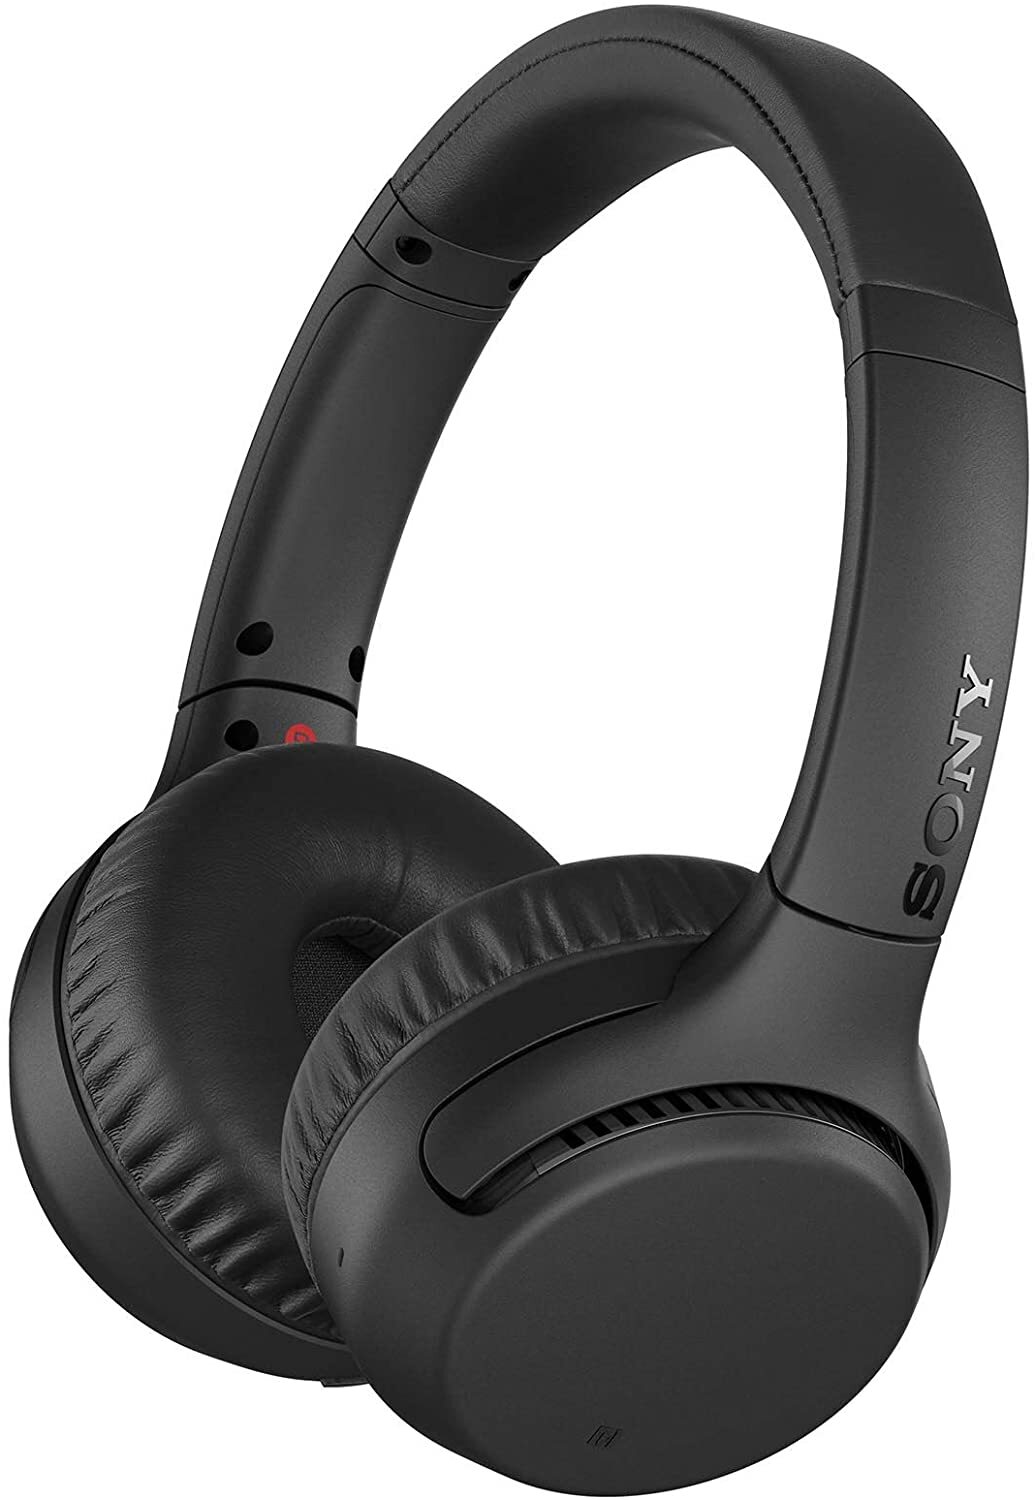 Tai nghe - Headphone Sony WH-XB700